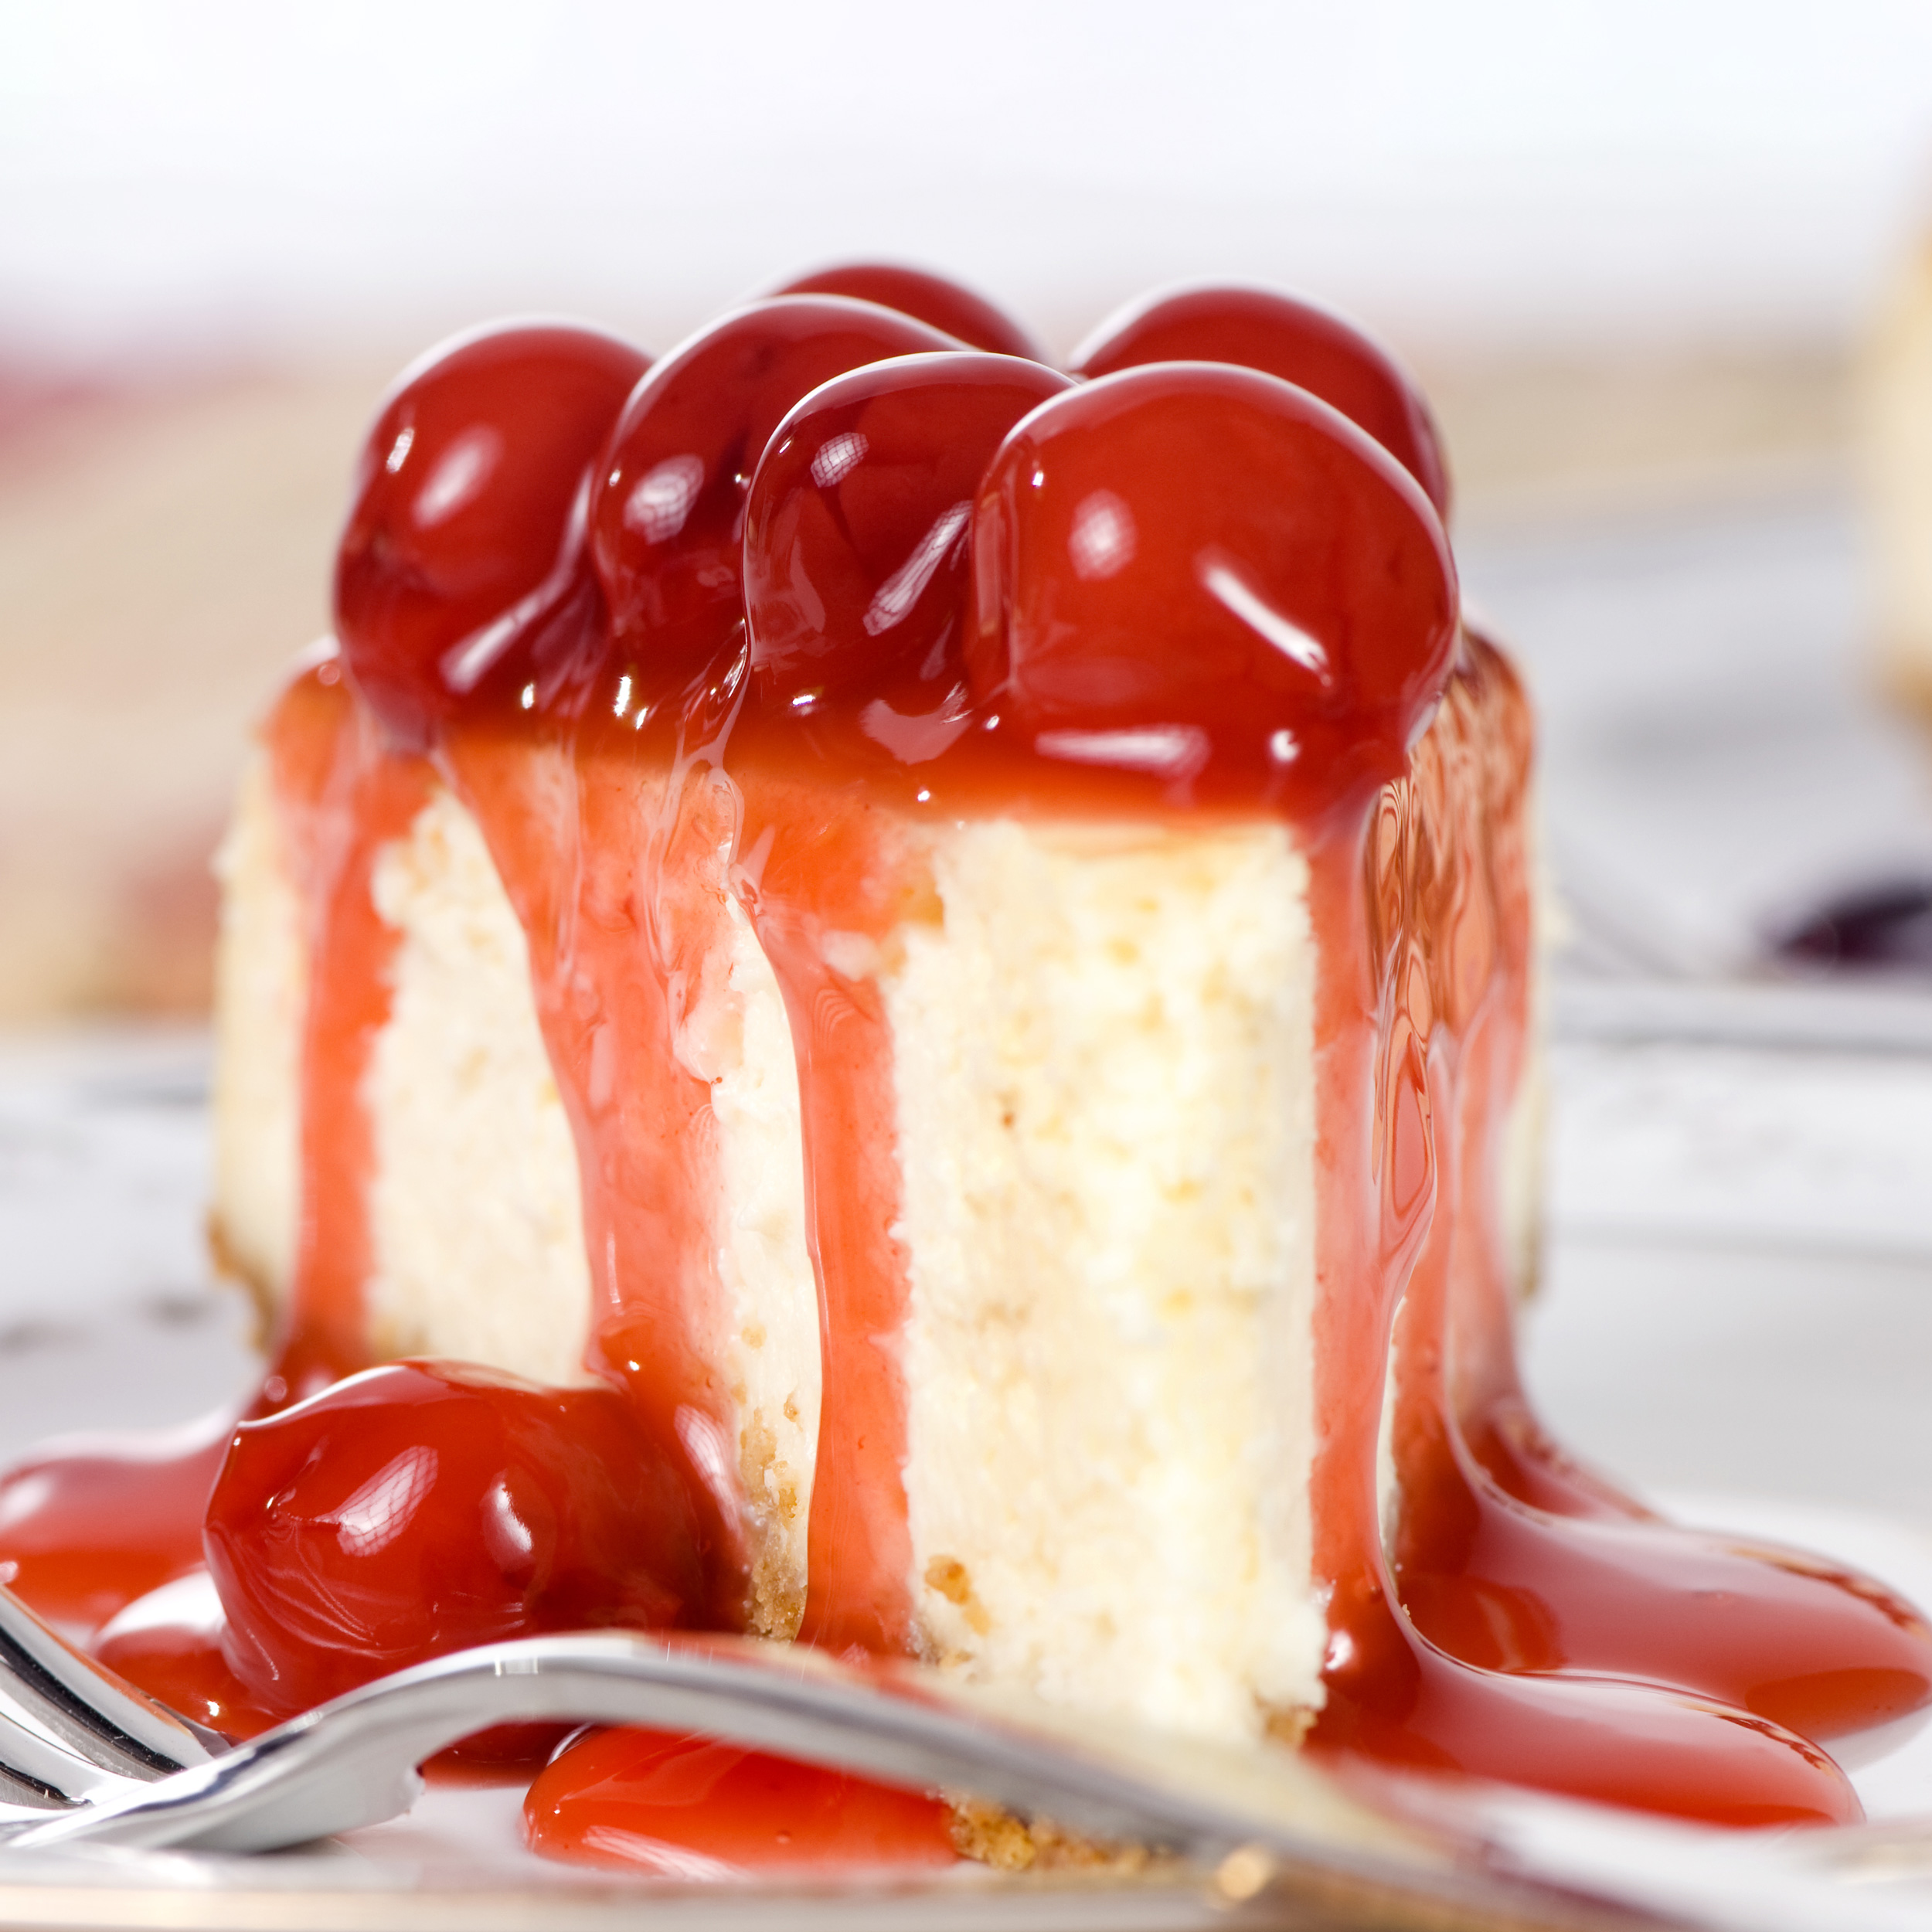 https://fatdaddios.com/wp-content/uploads/2022/01/cherry-cheesecake-sq.jpg